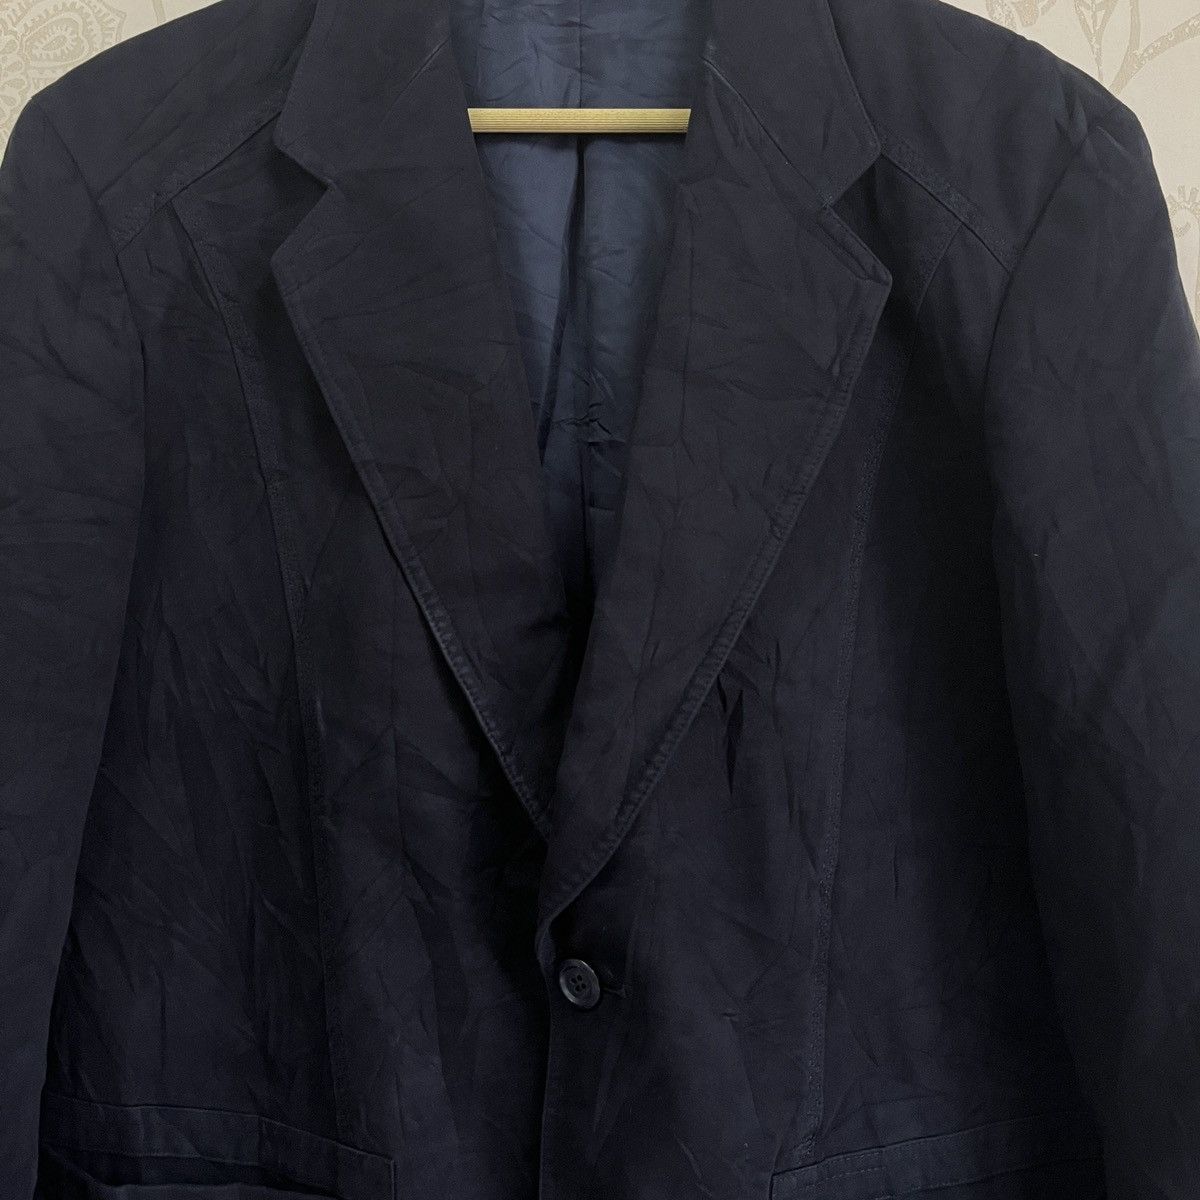 Italy Lanvin Blazer 2 Buttons Jacket Vintage - 8